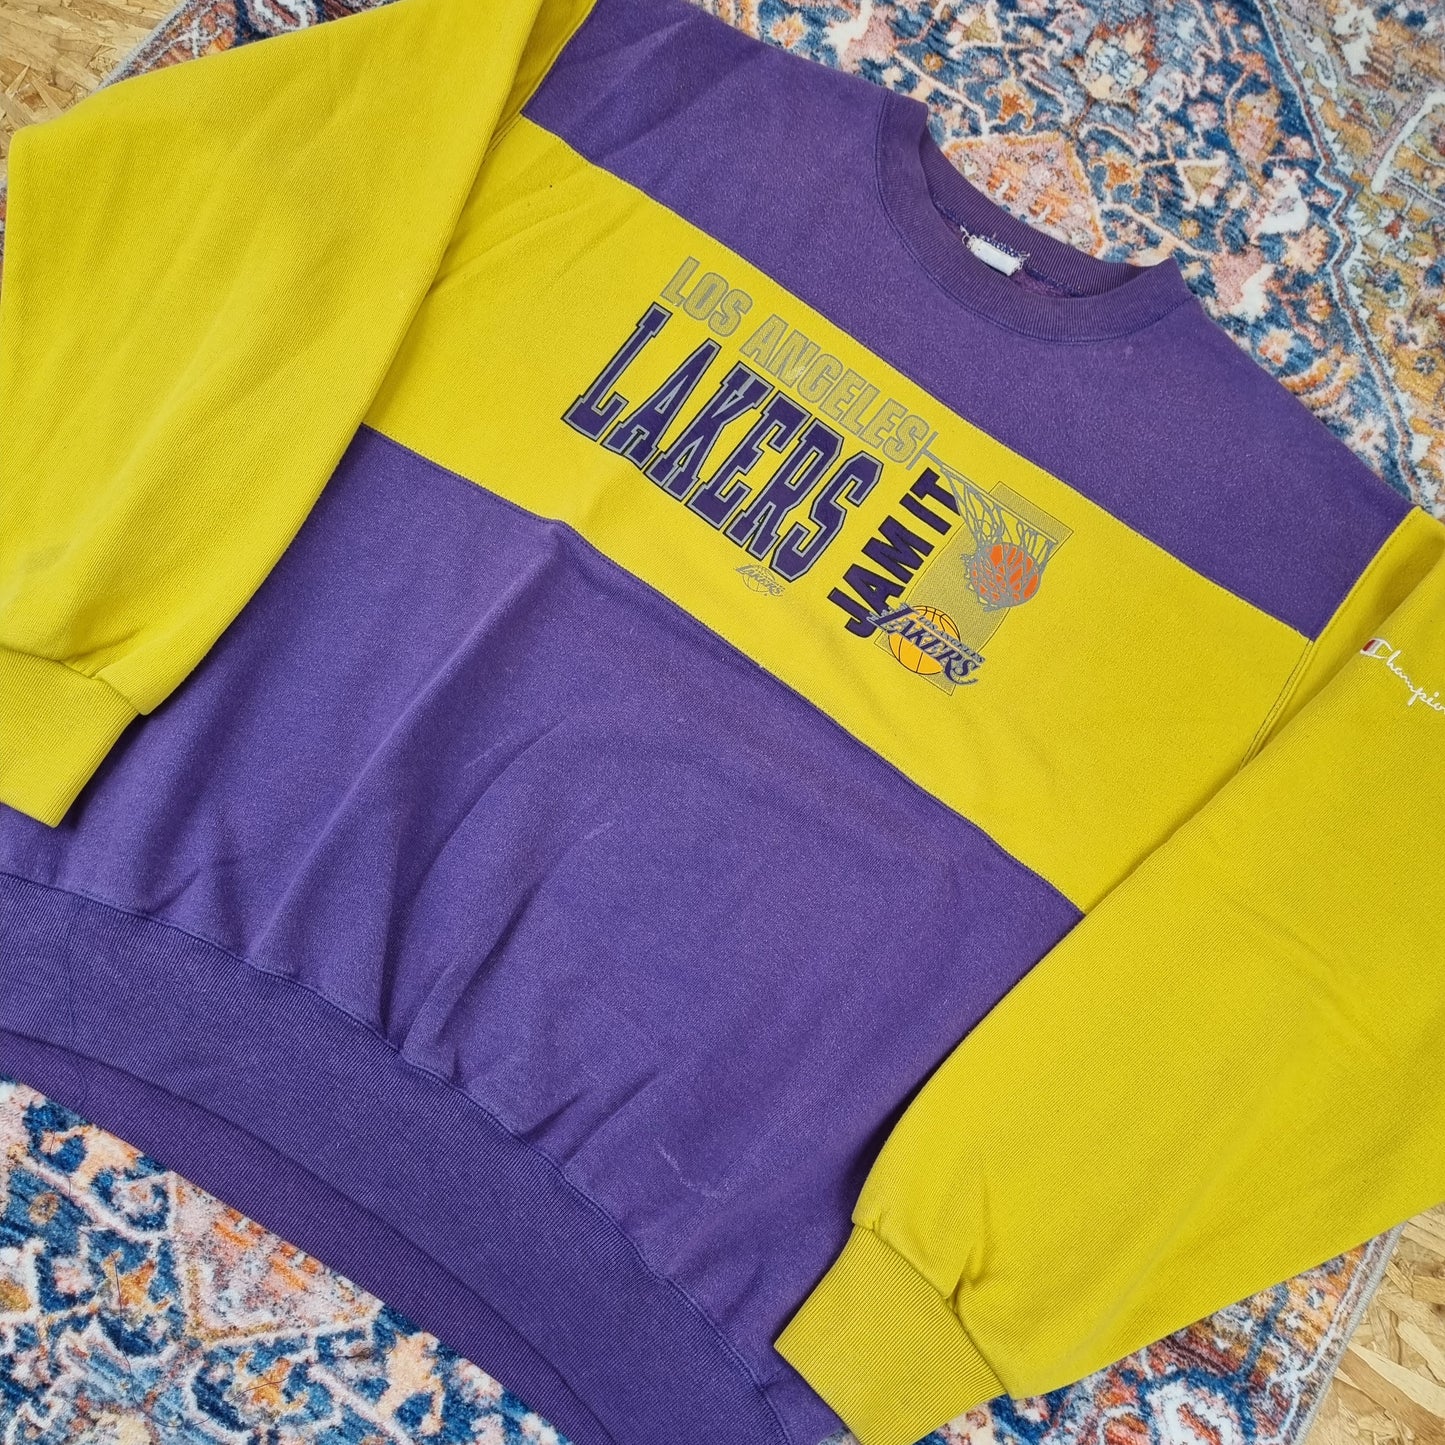 Champion Lakers Sweatshirt (L)